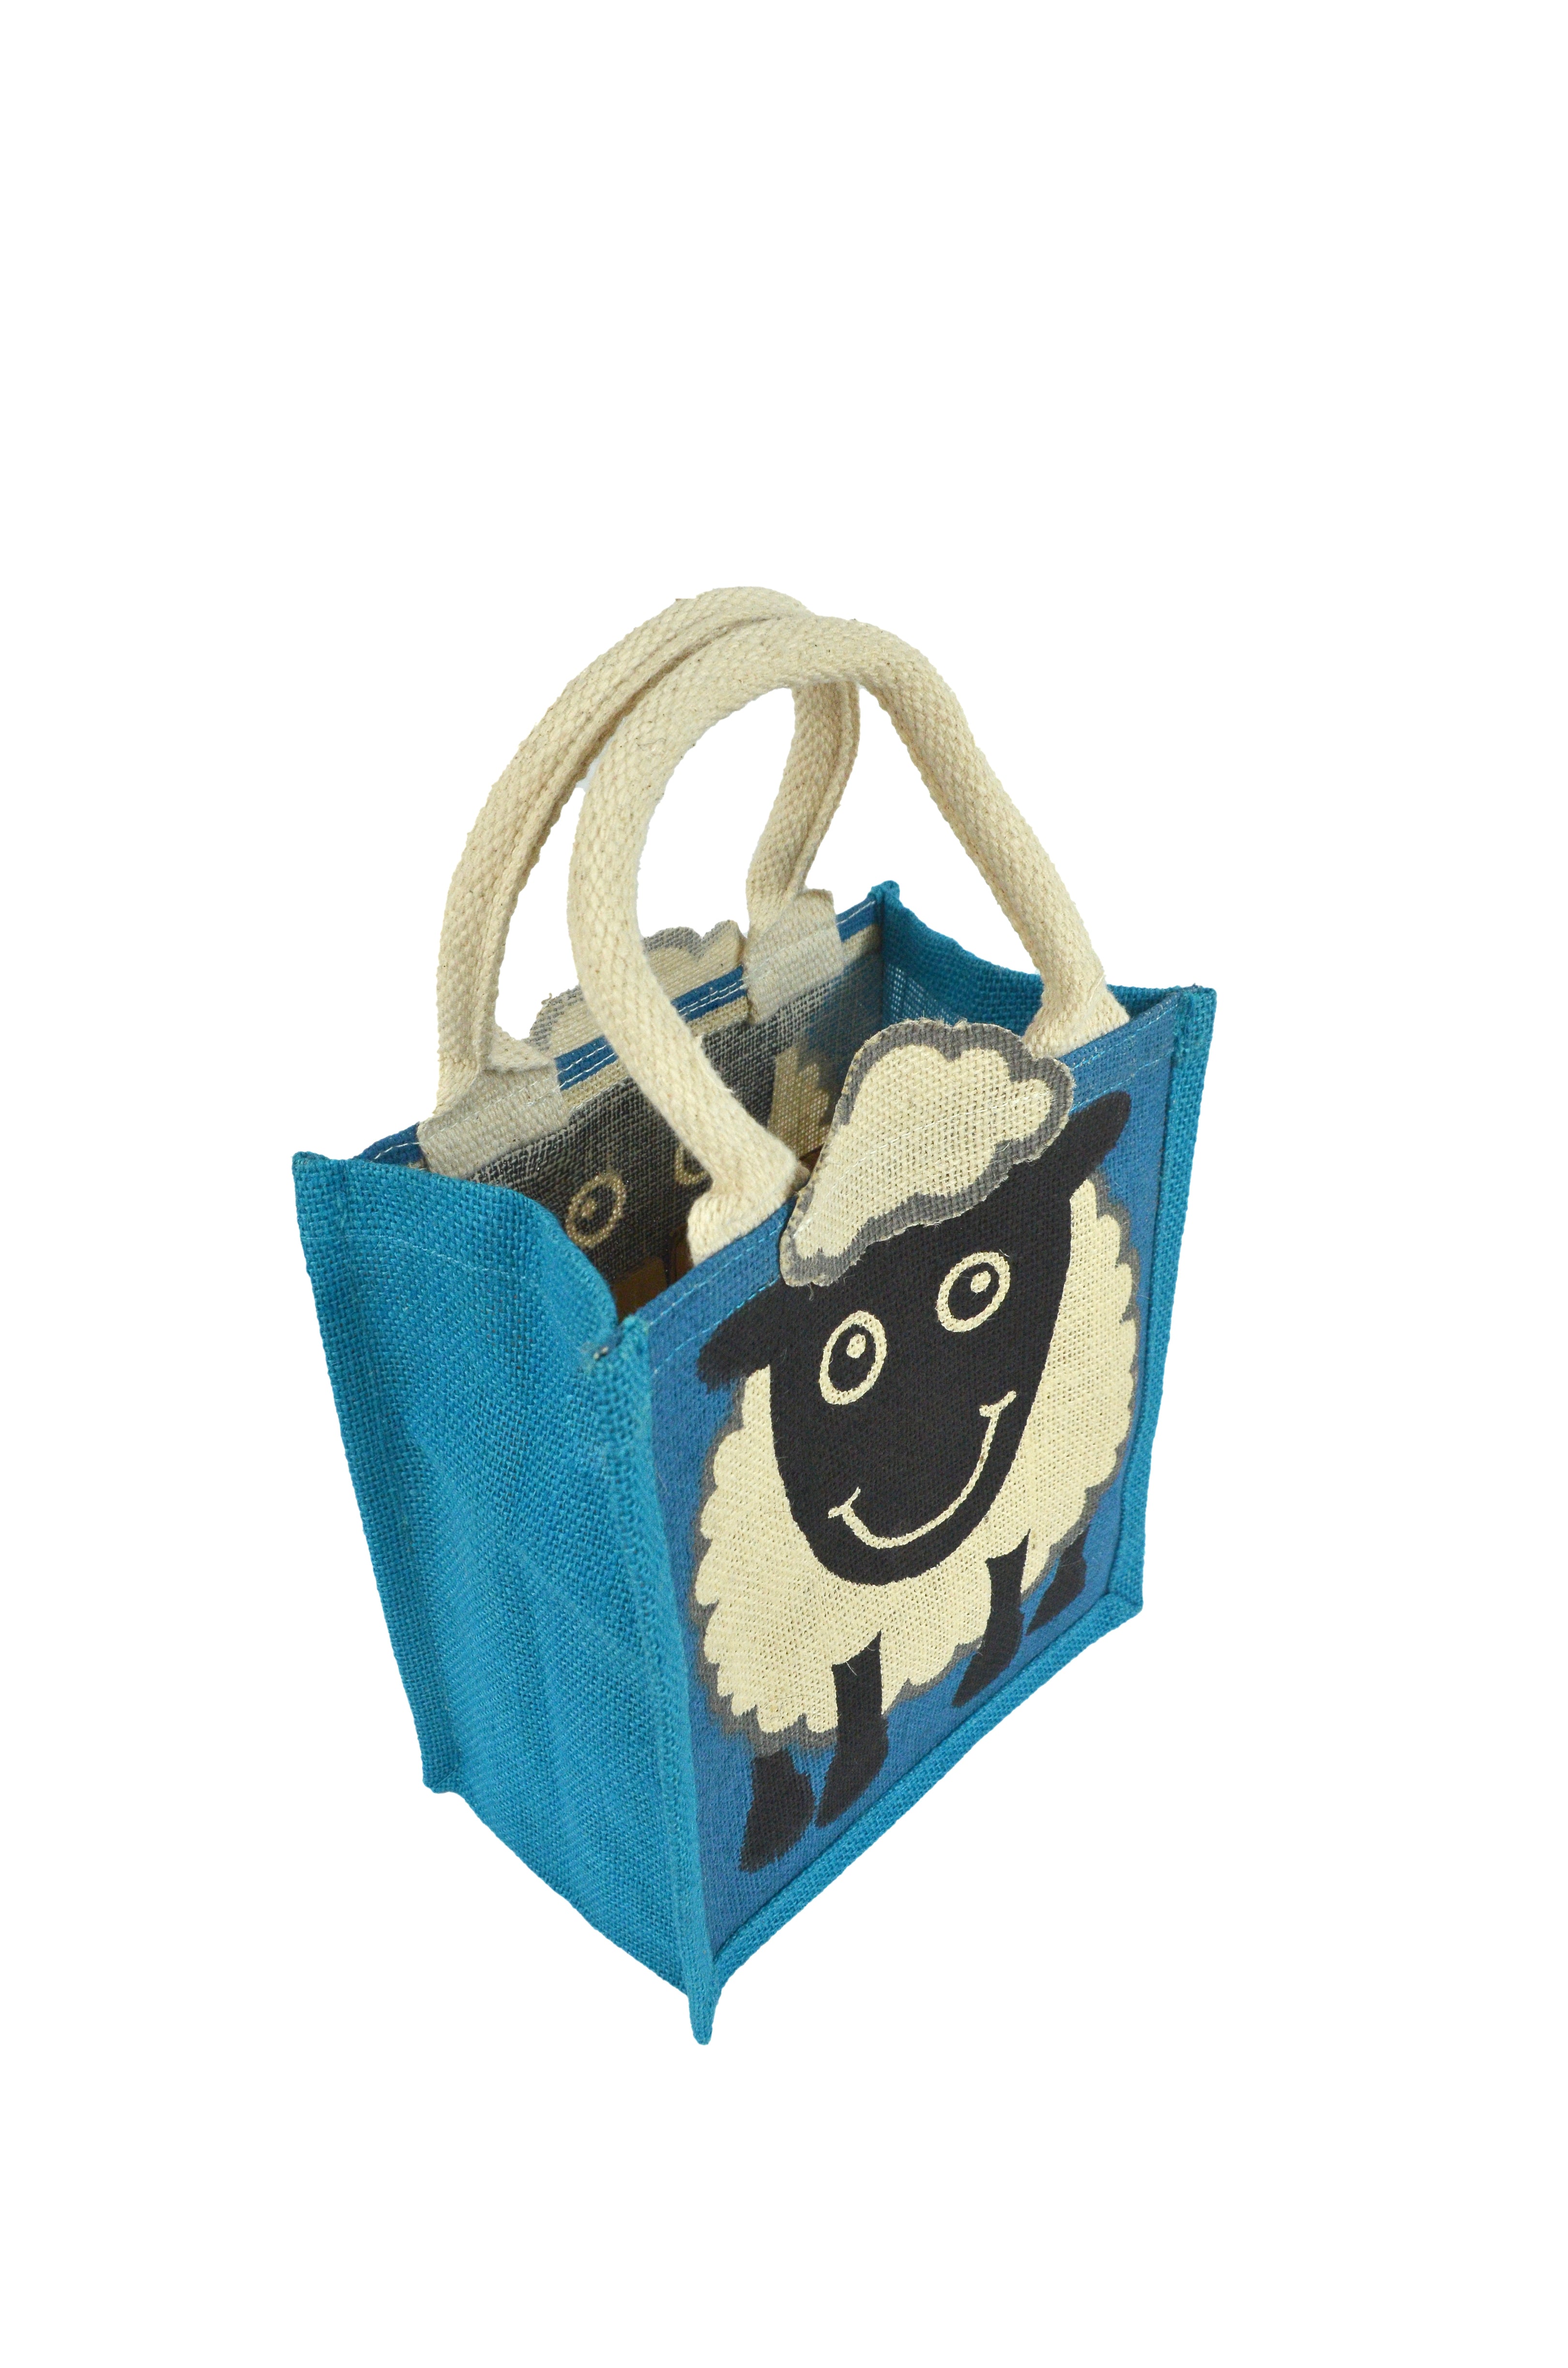 Animal Jute Bag - Sheep Print